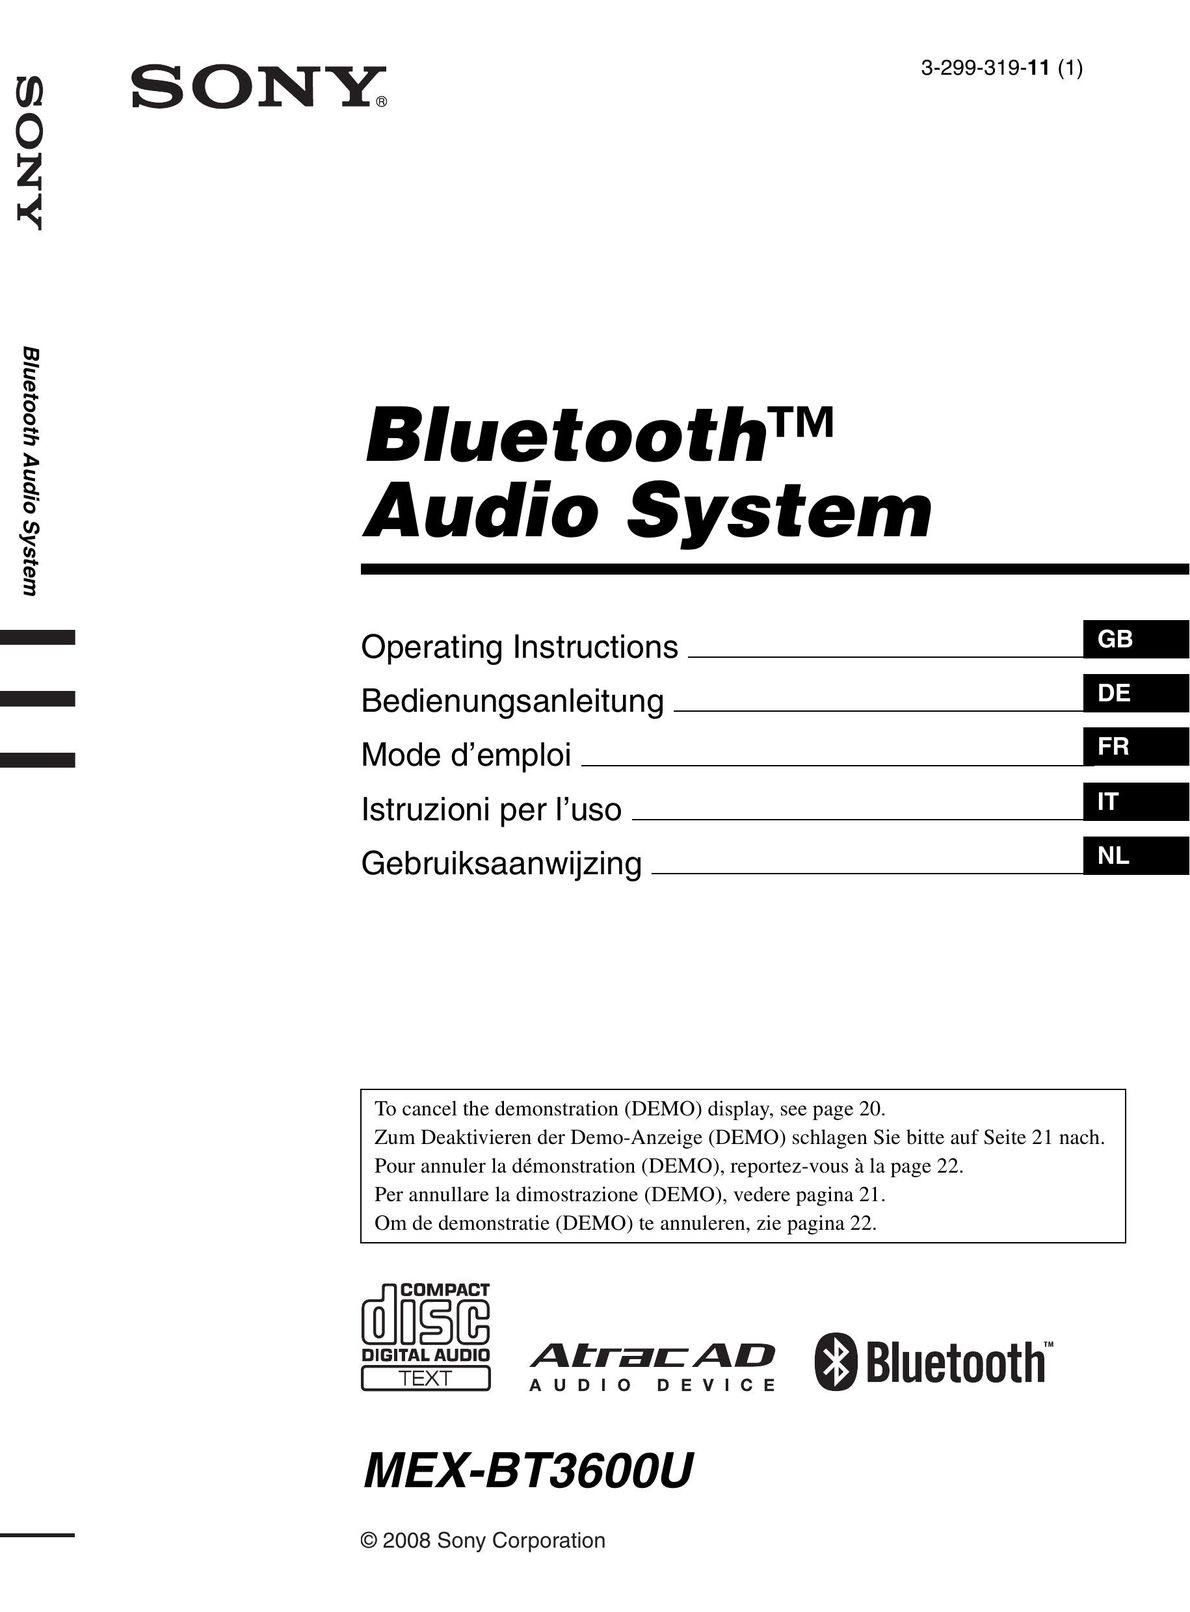 Sony MEX-BT3600U Bluetooth Headset User Manual